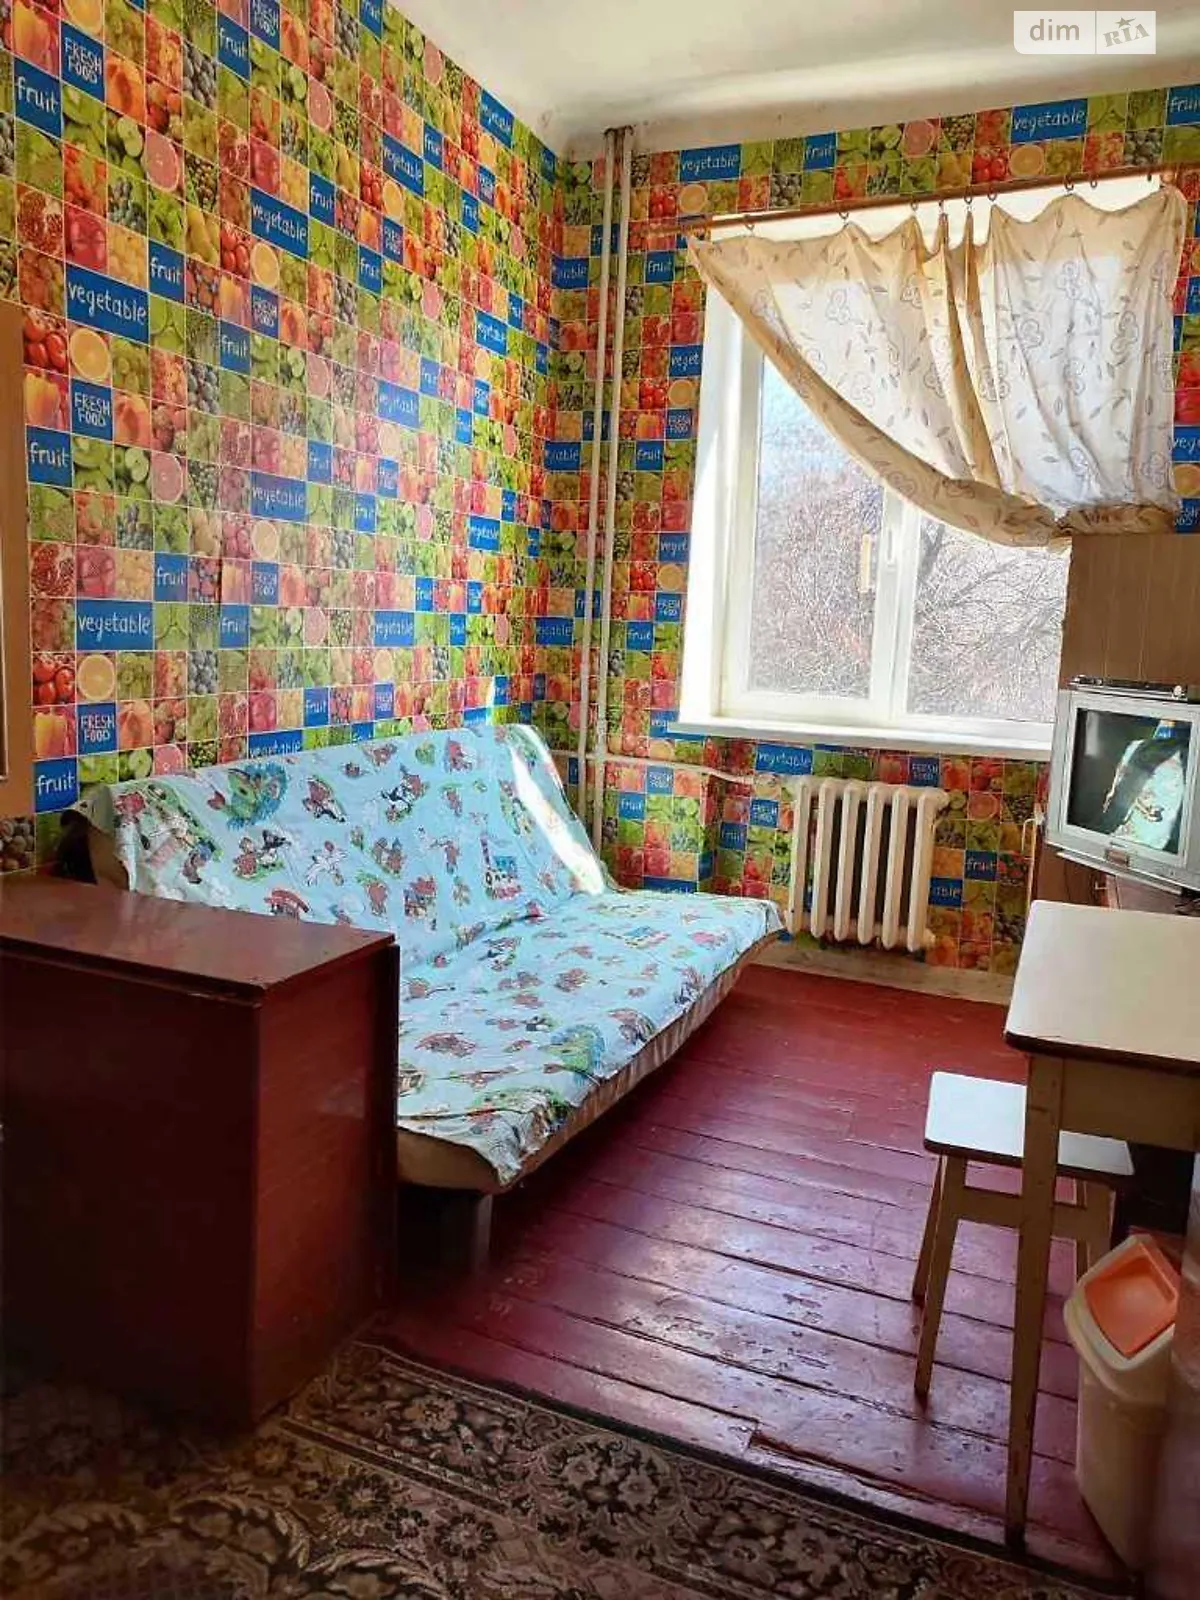 Продается комната 16 кв. м в Харькове - фото 2